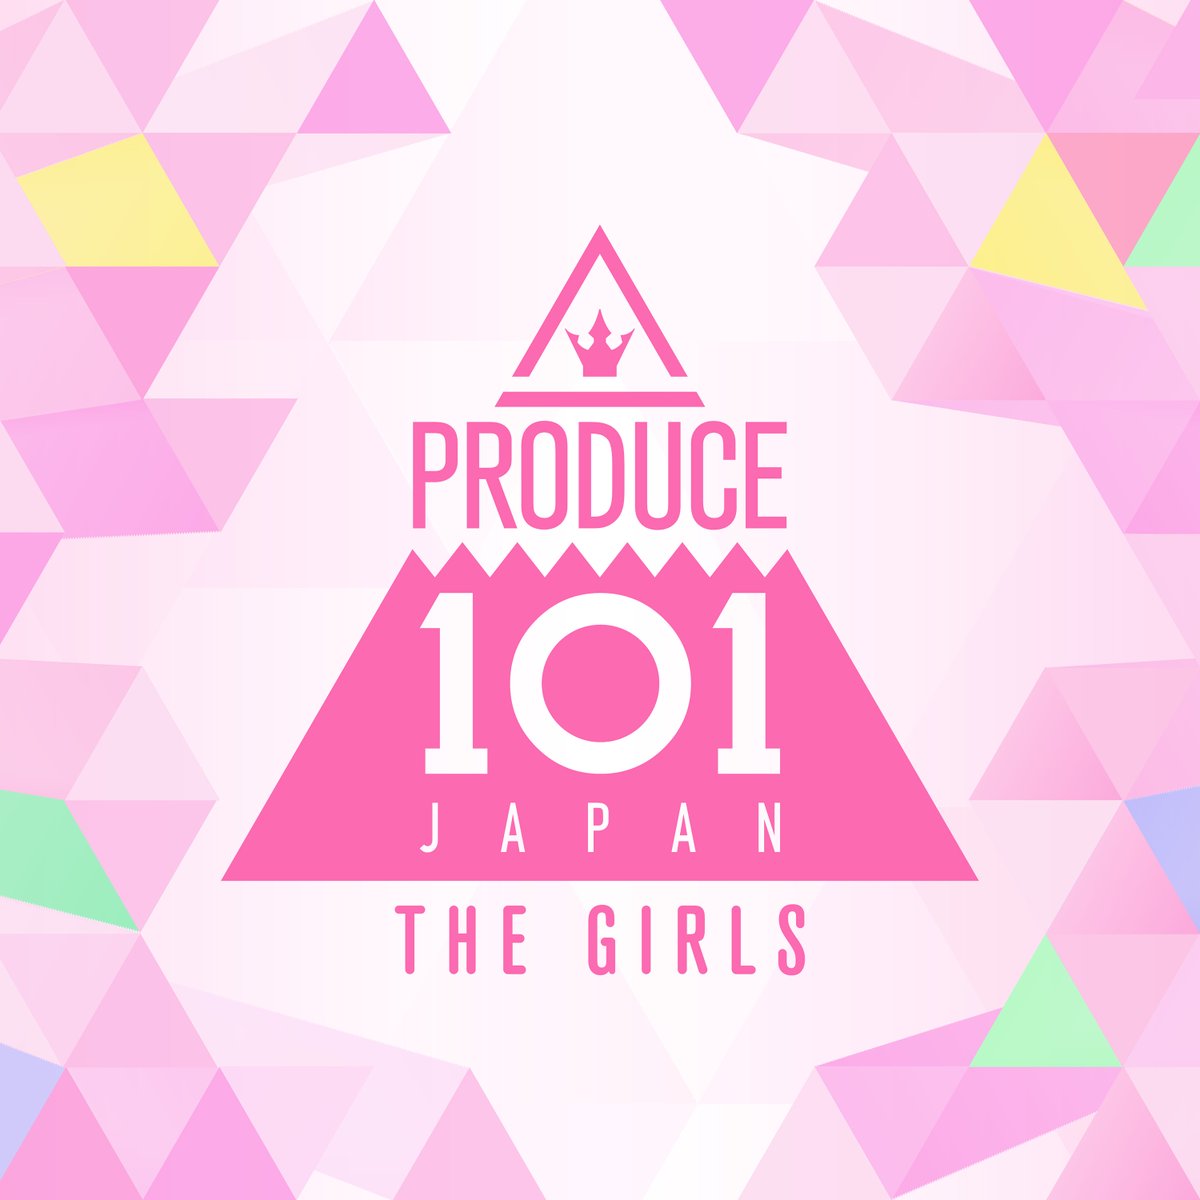 PRODUCE 101 JAPAN THE GIRLS